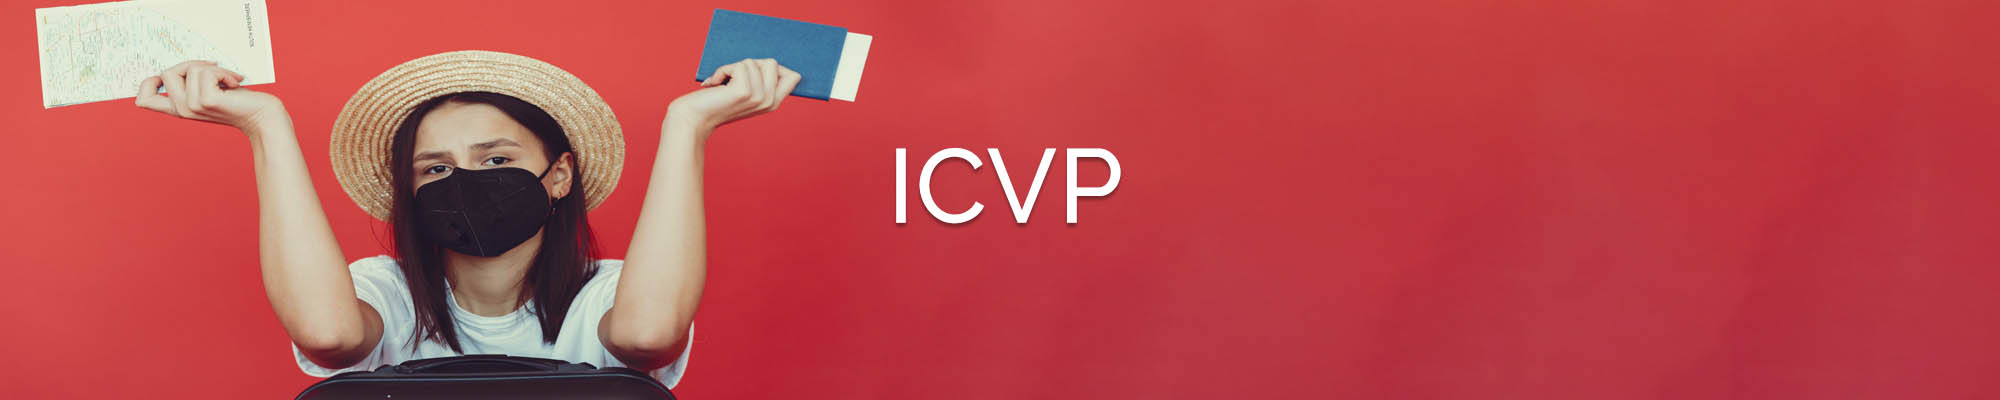 ICVP